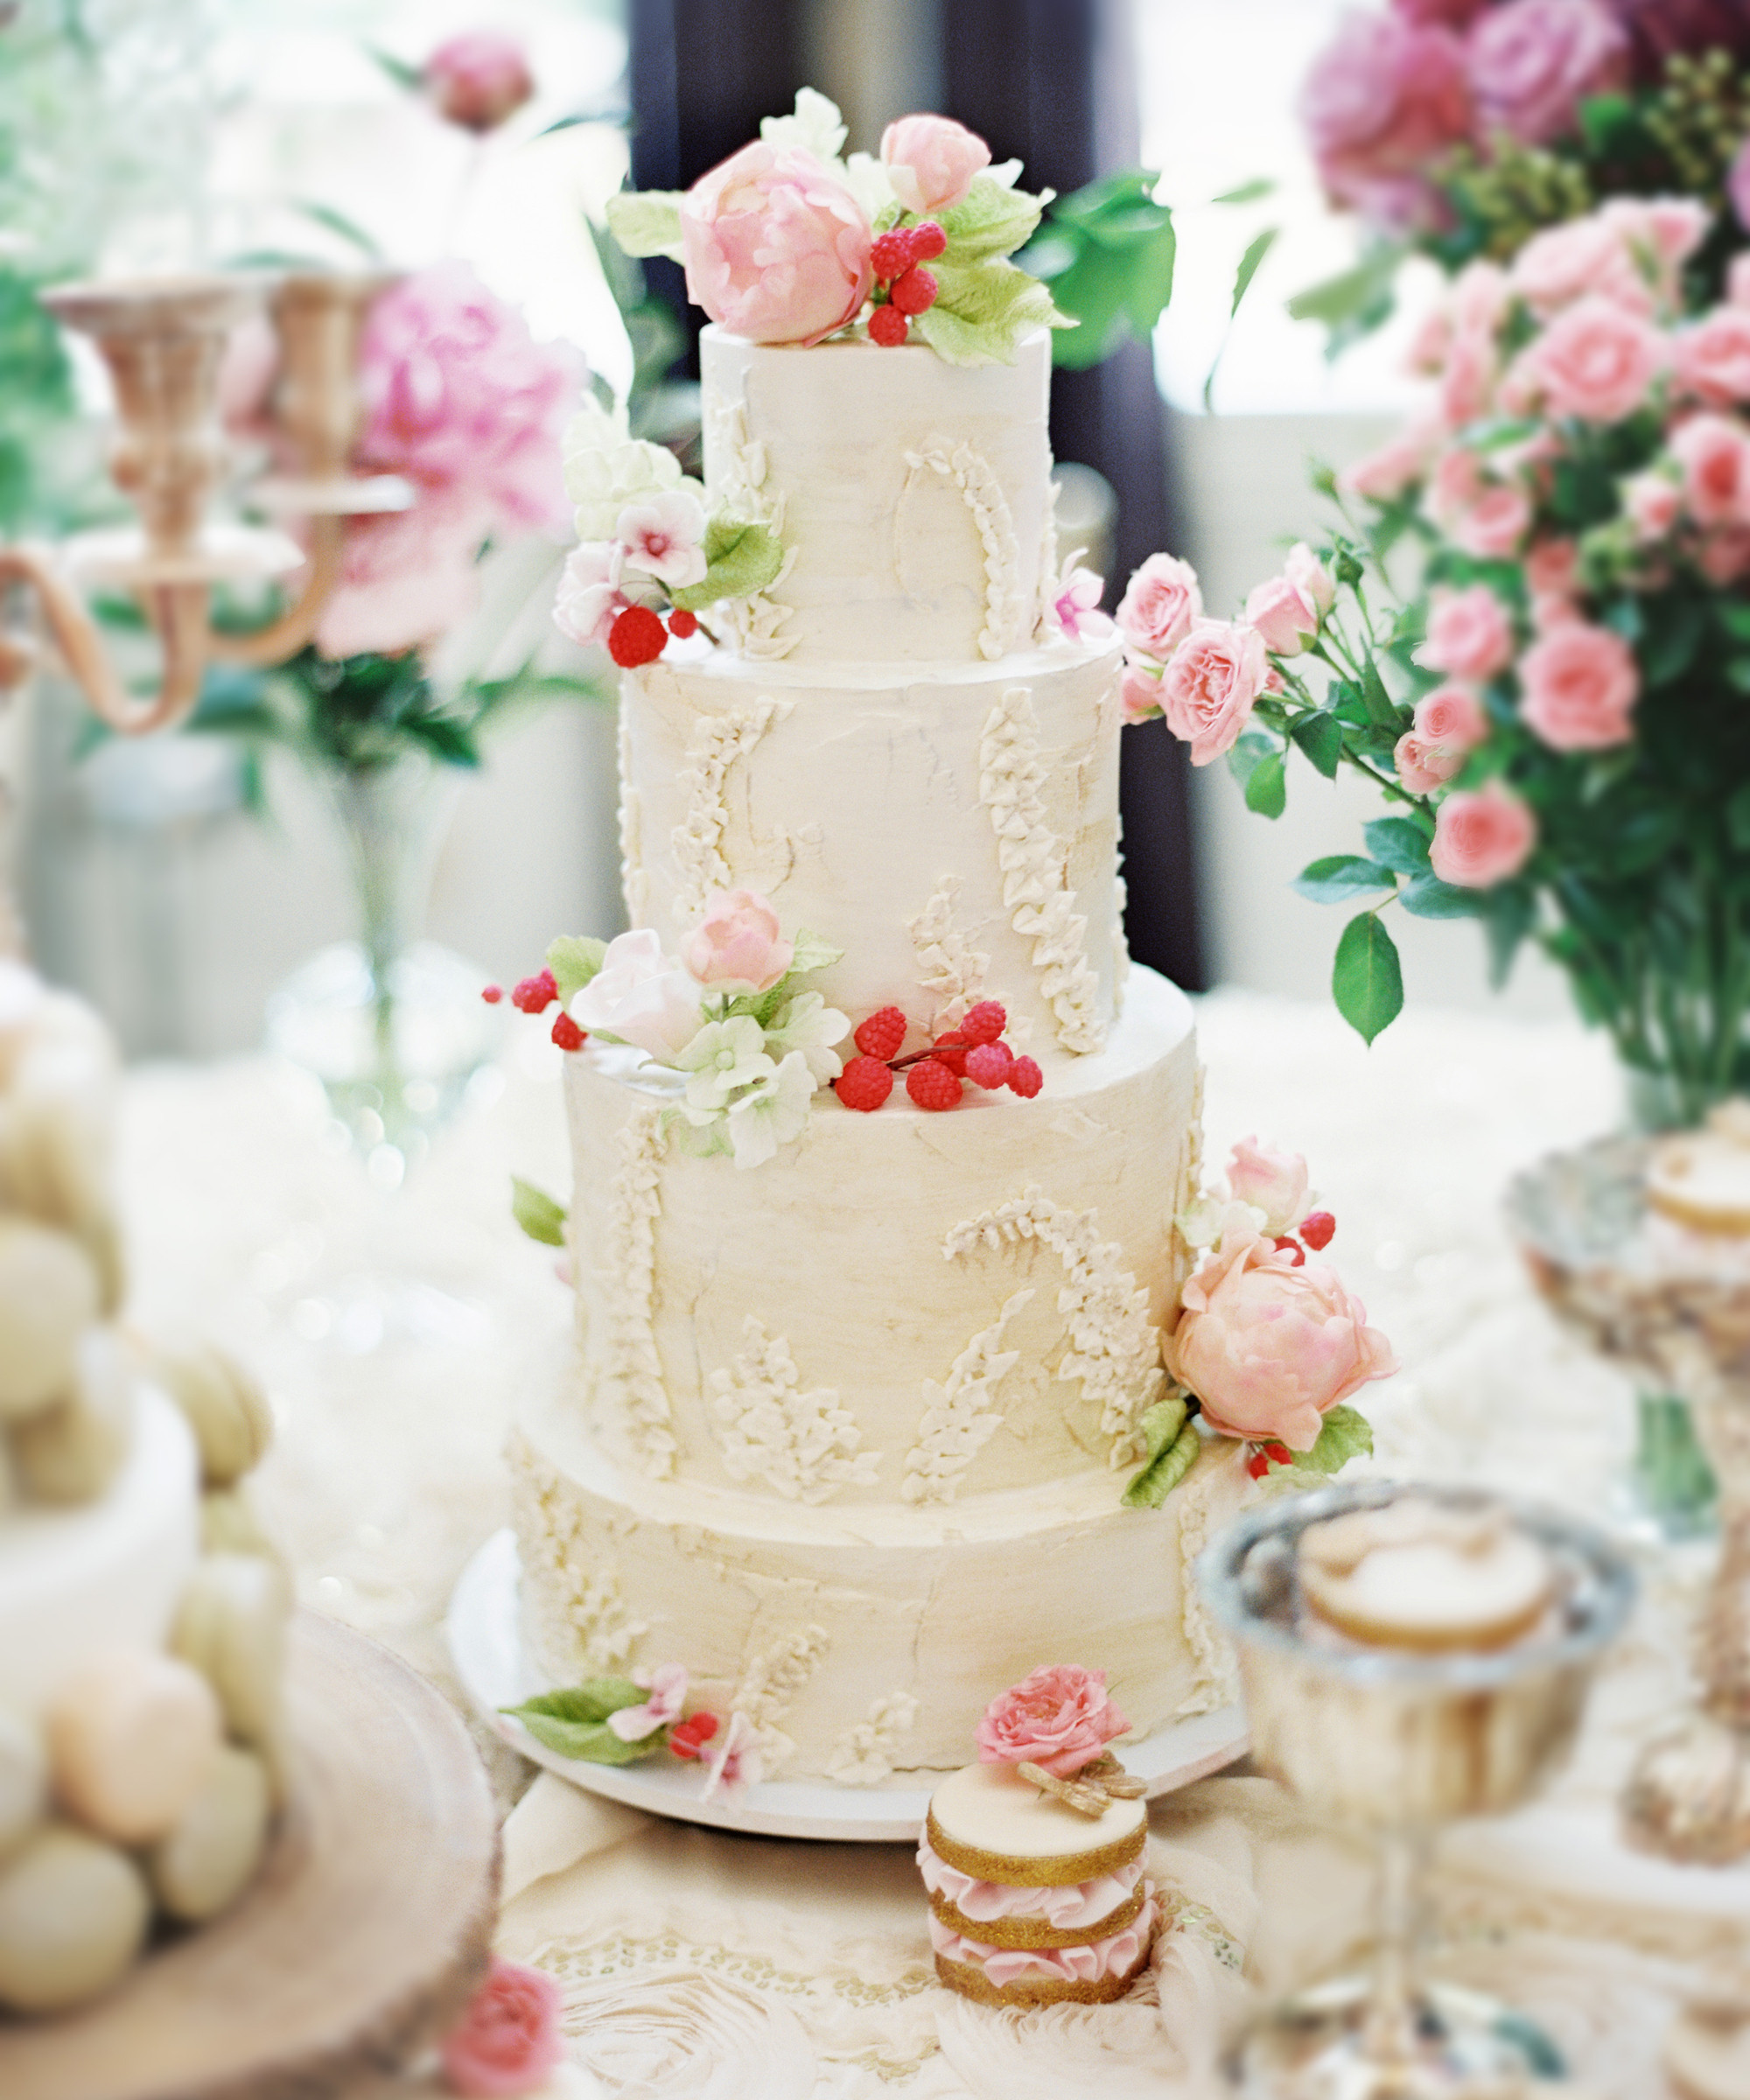 Wedding Cakes For You
 Vegan and Gluten Free Wedding Cake Ideas Alternative